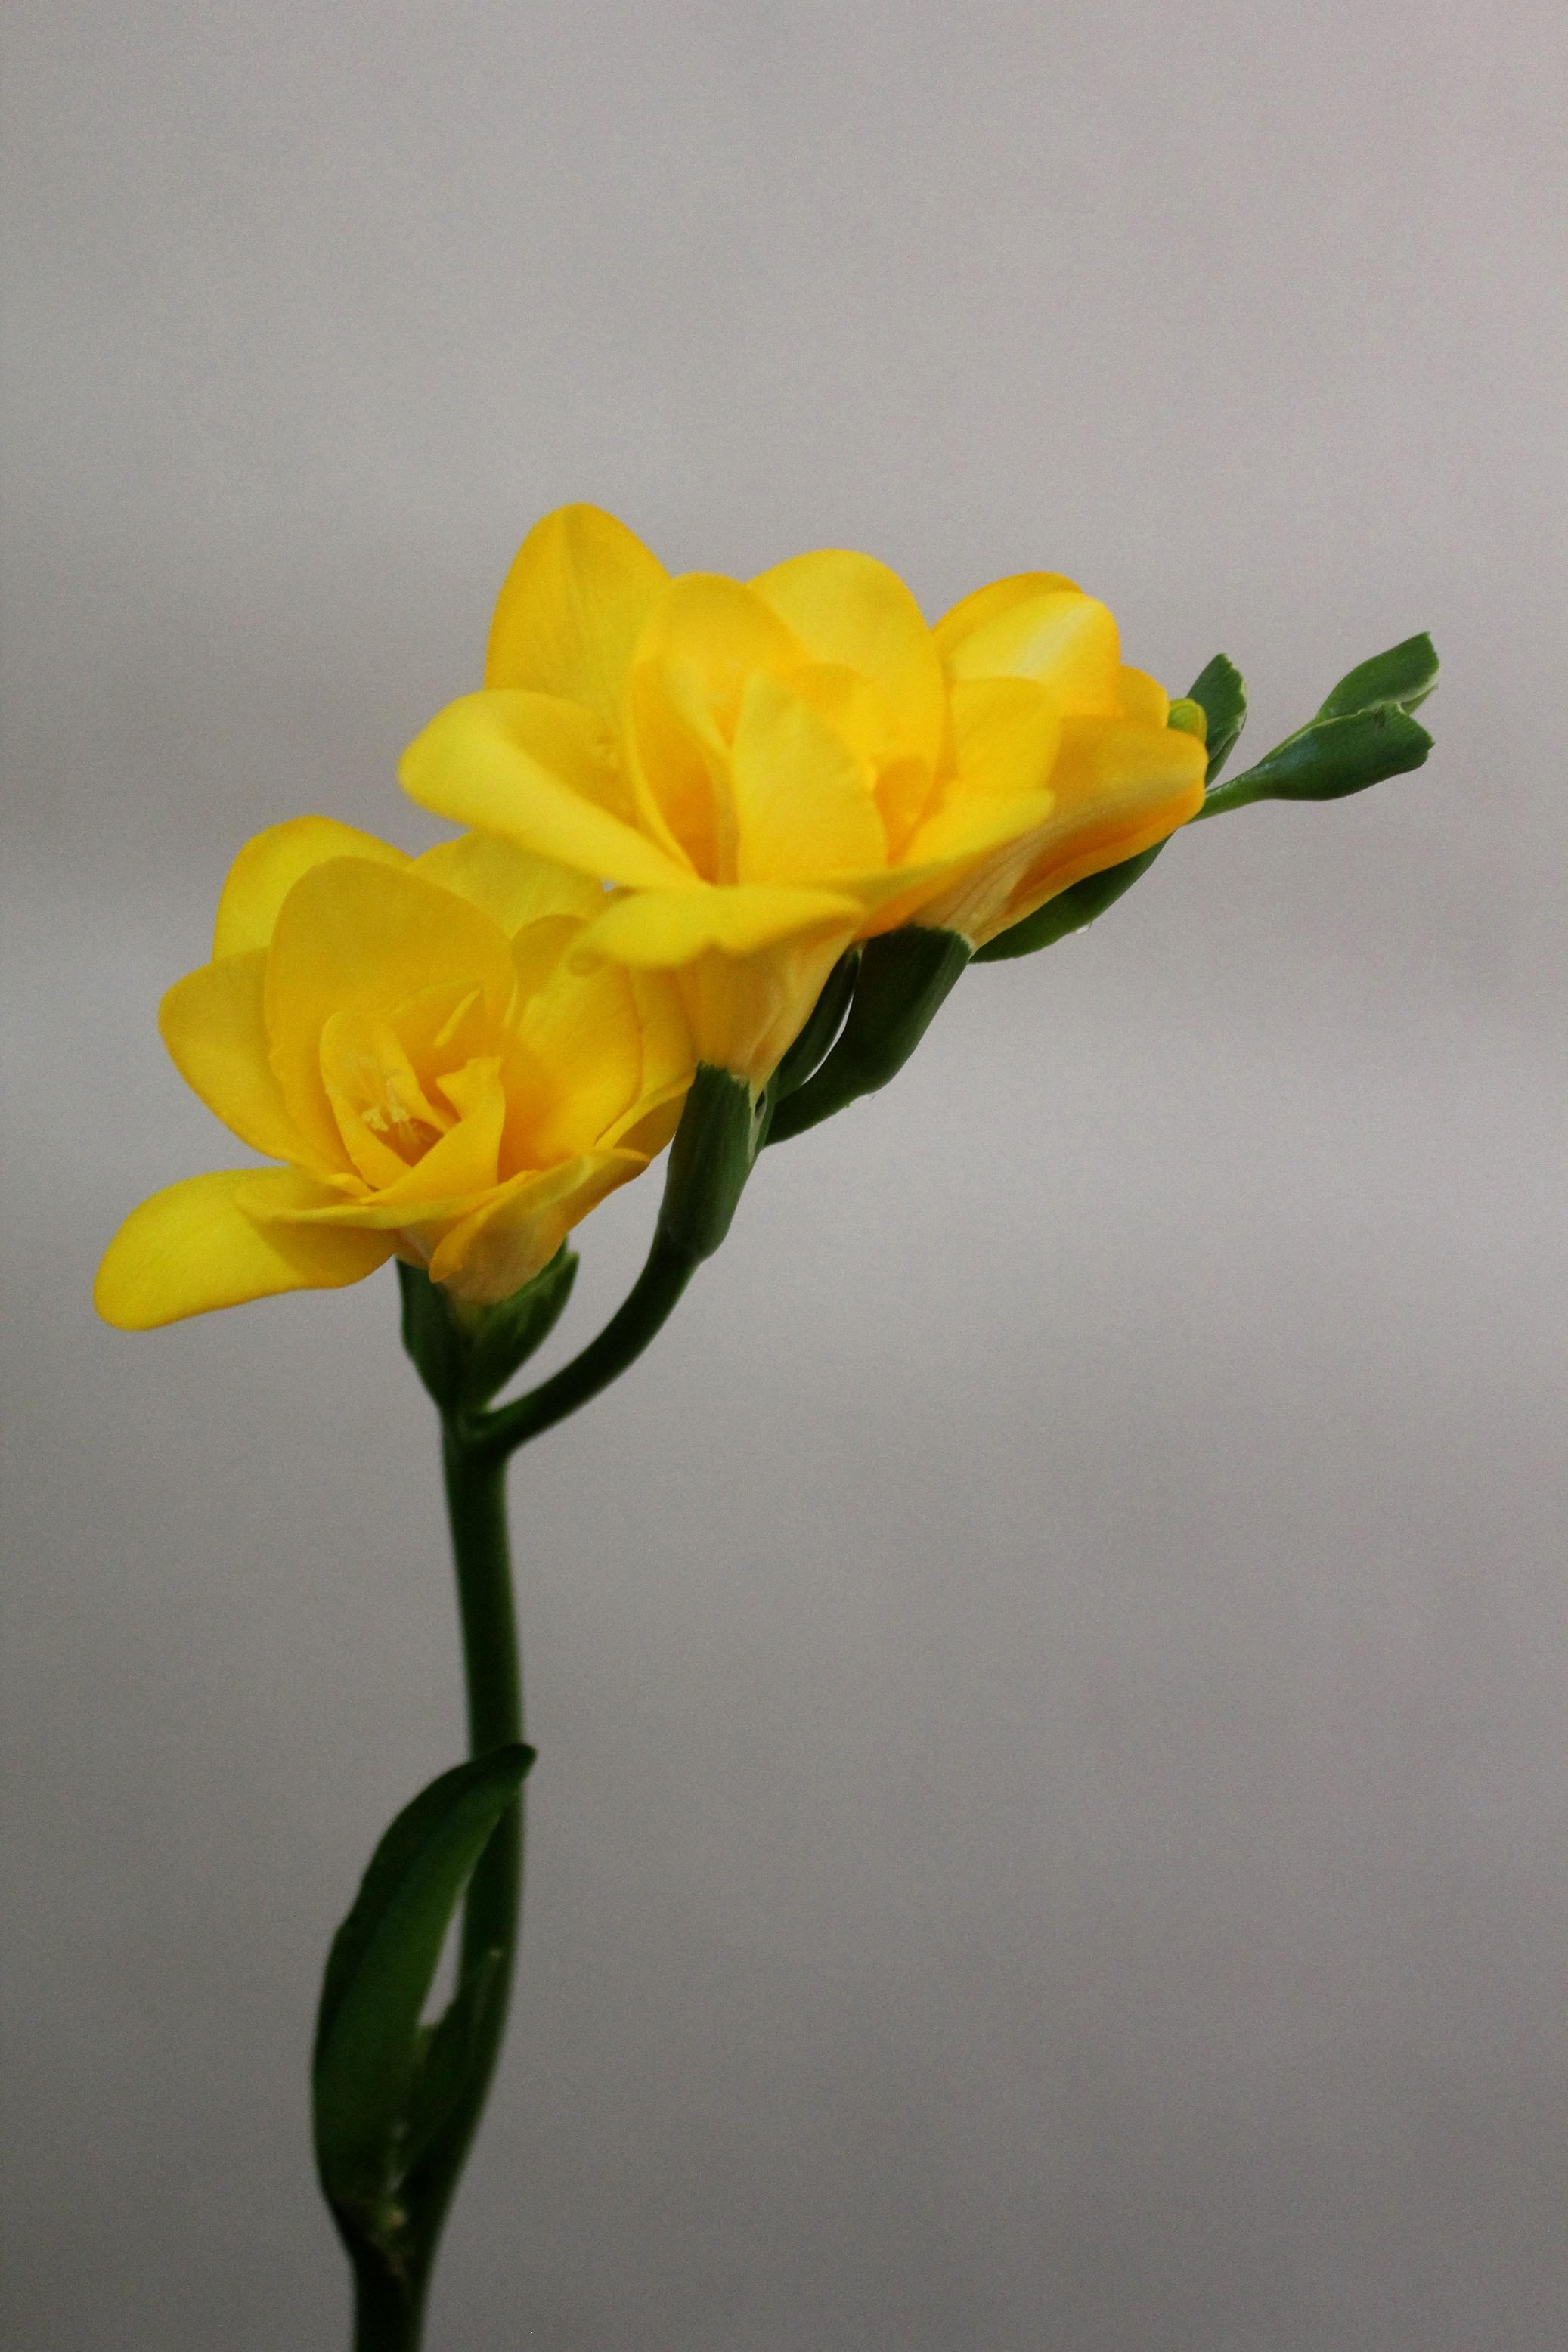 Flores de fresia de color amarillo brillante